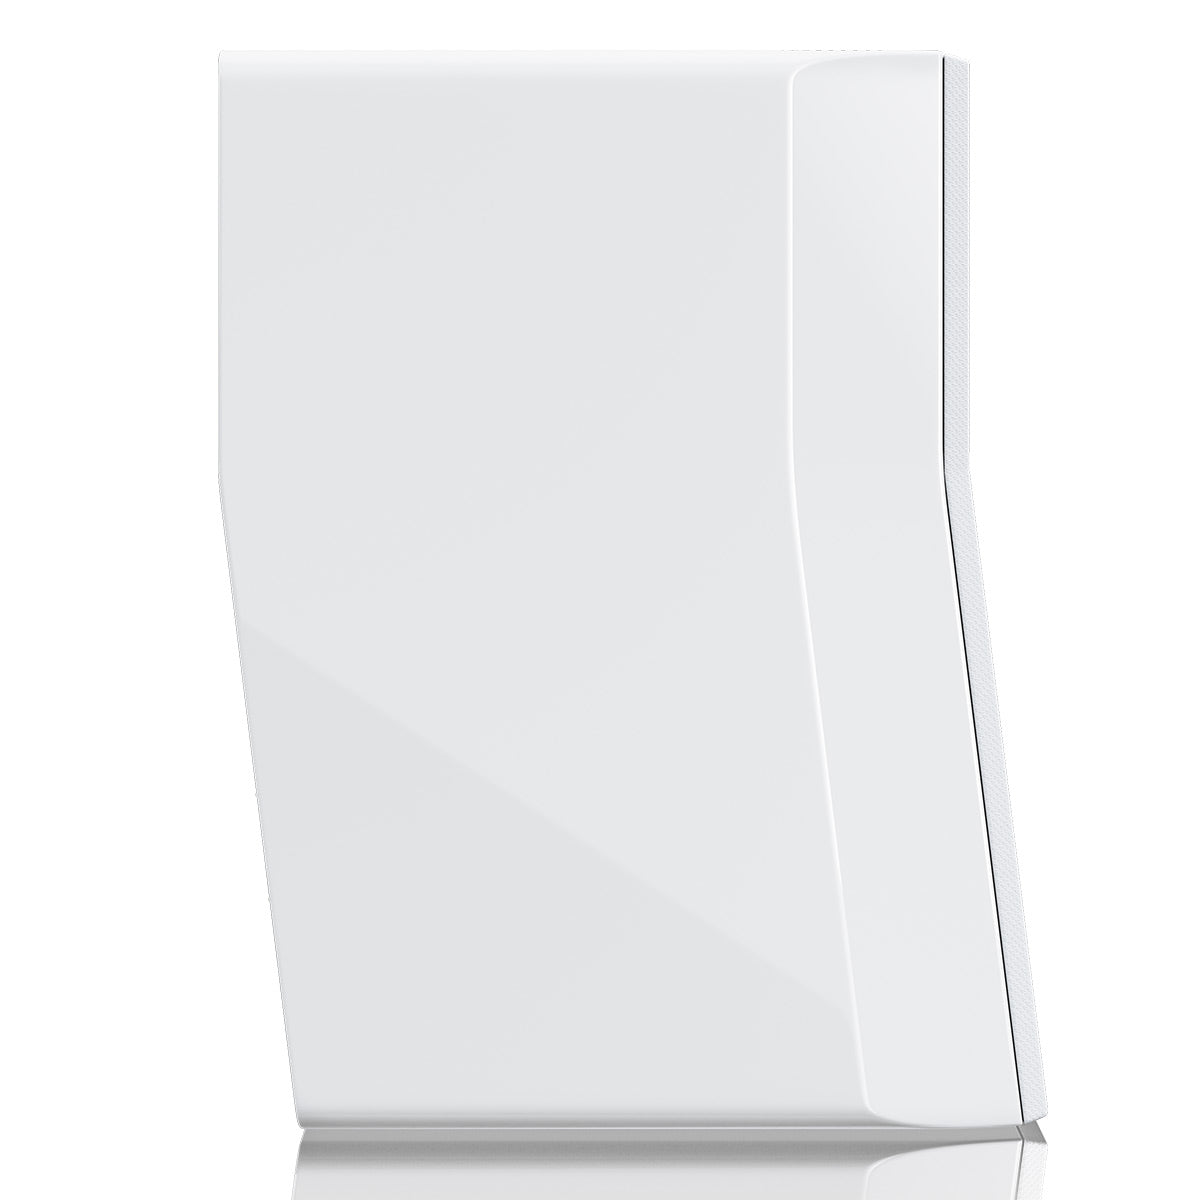 SVS Ultra Evolution Bookshelf Speakers- Pair (Piano Gloss White)